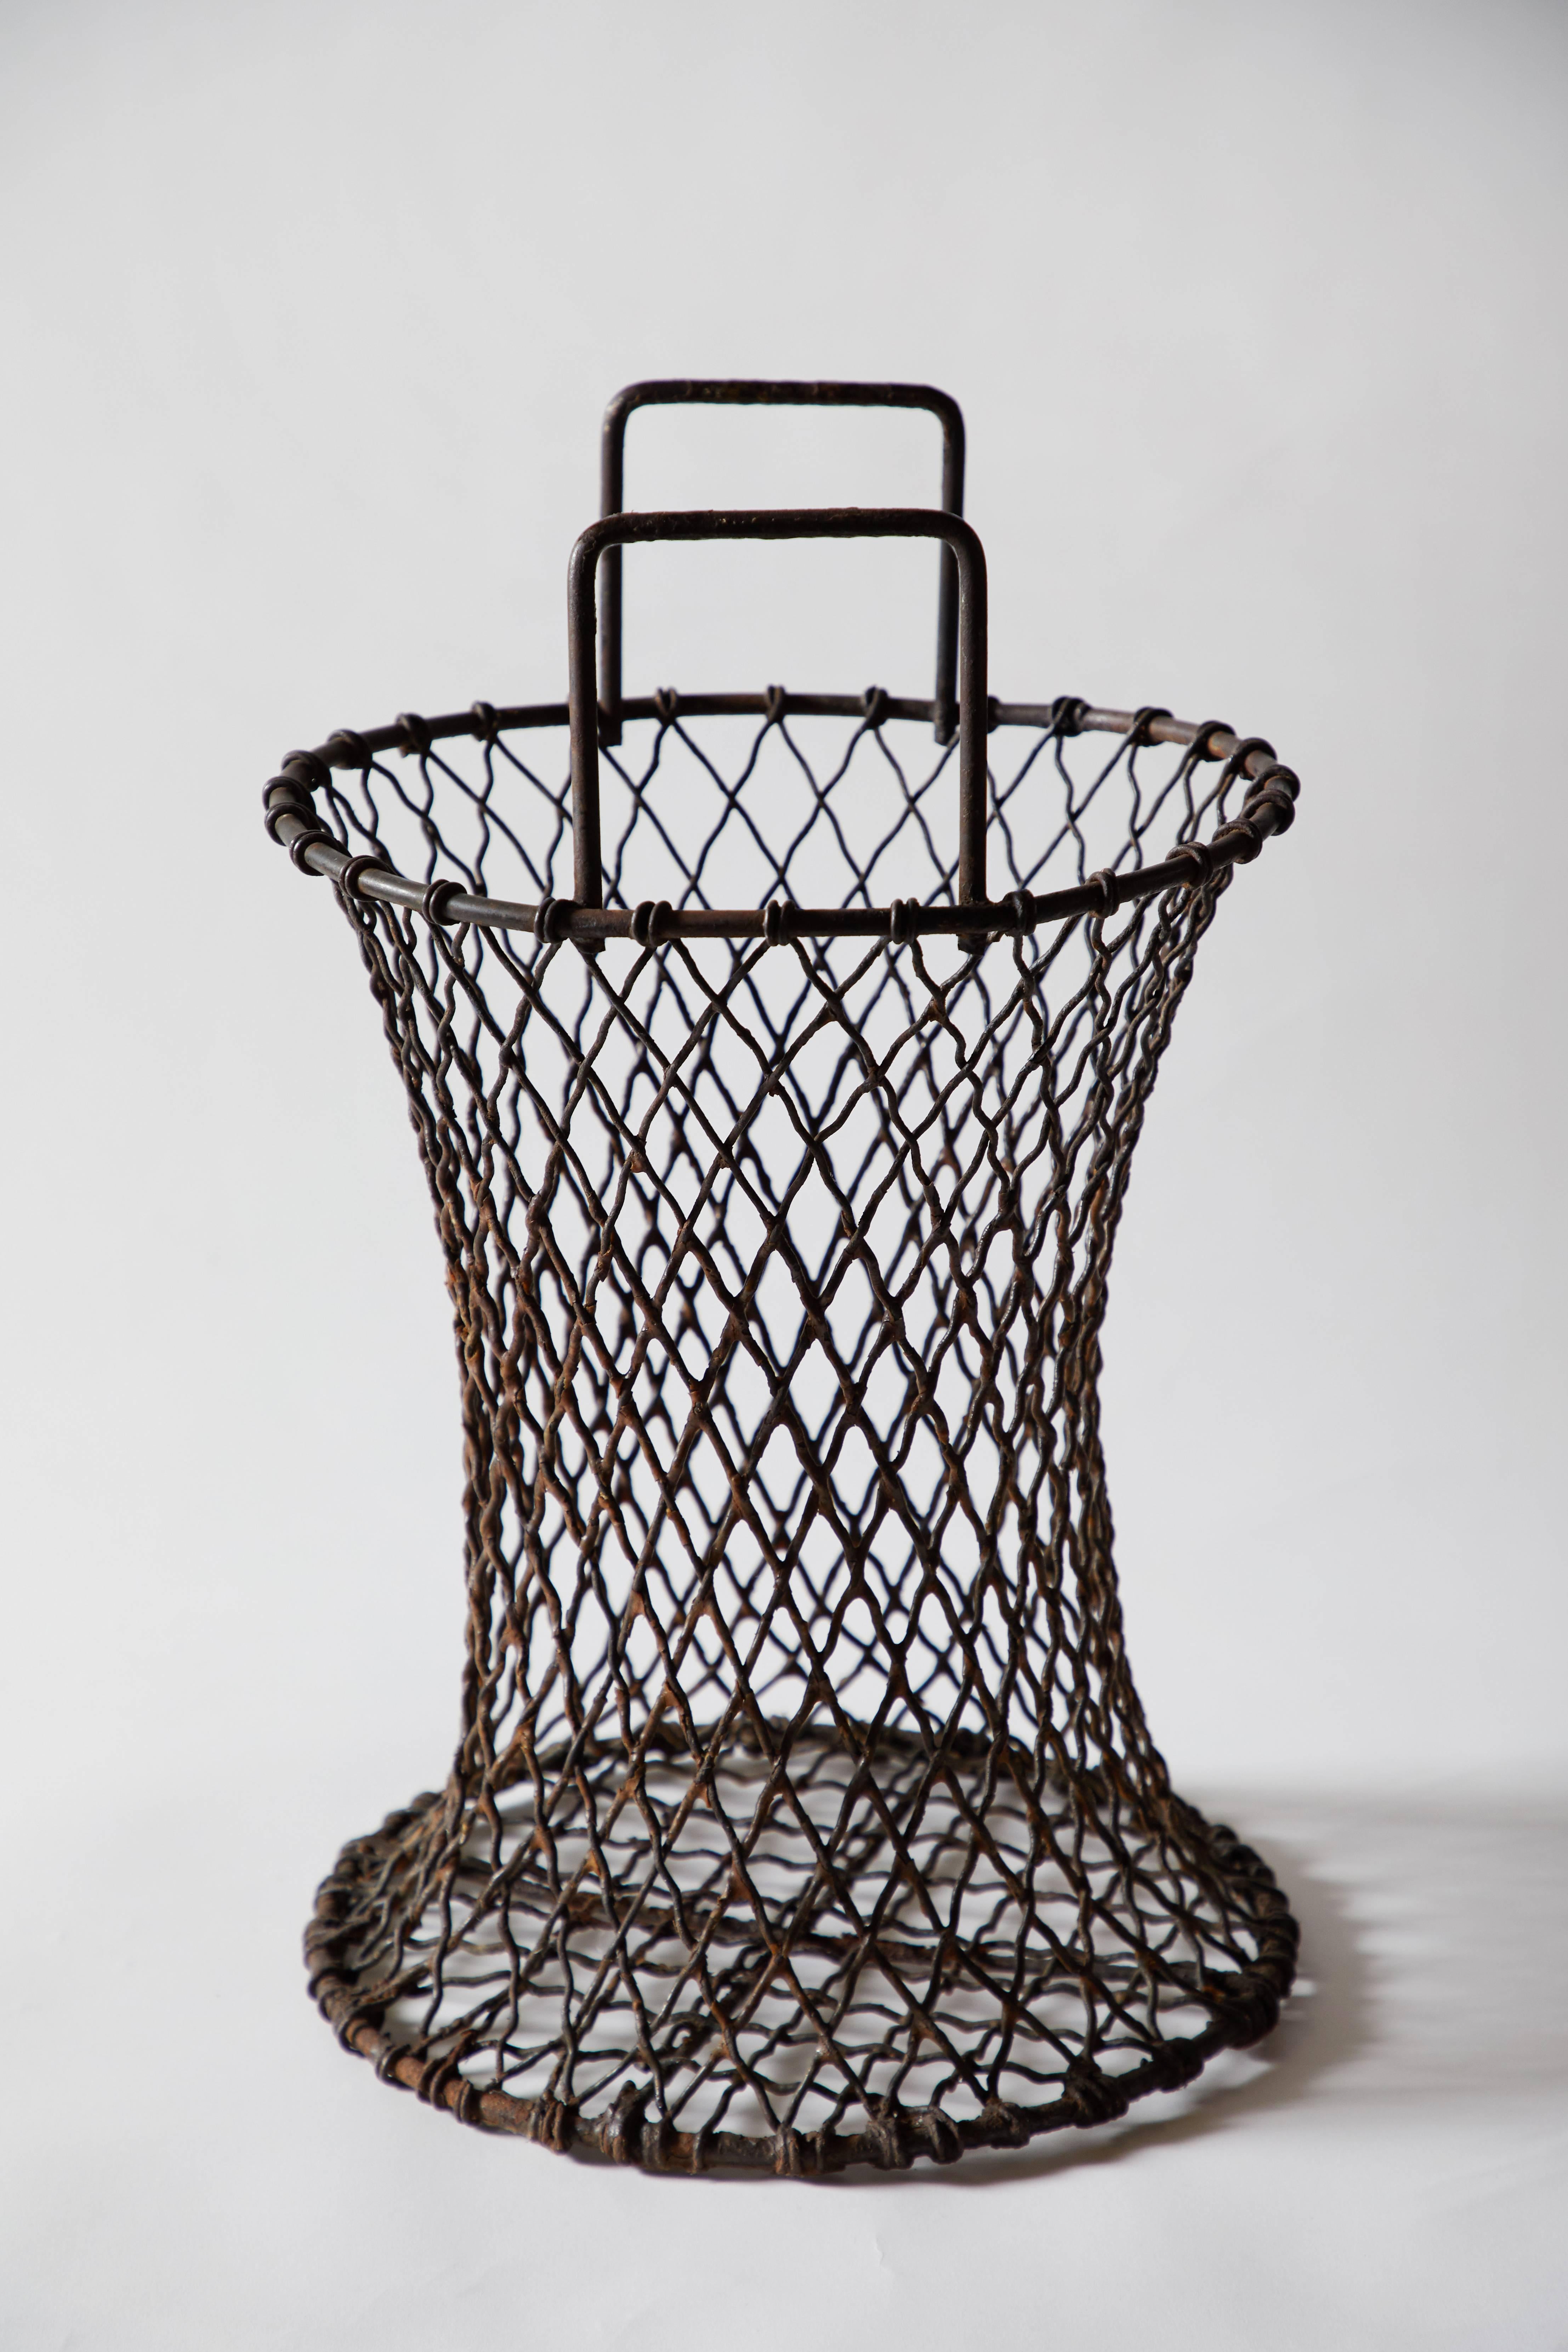 American Sculptural Iron Waste Basket